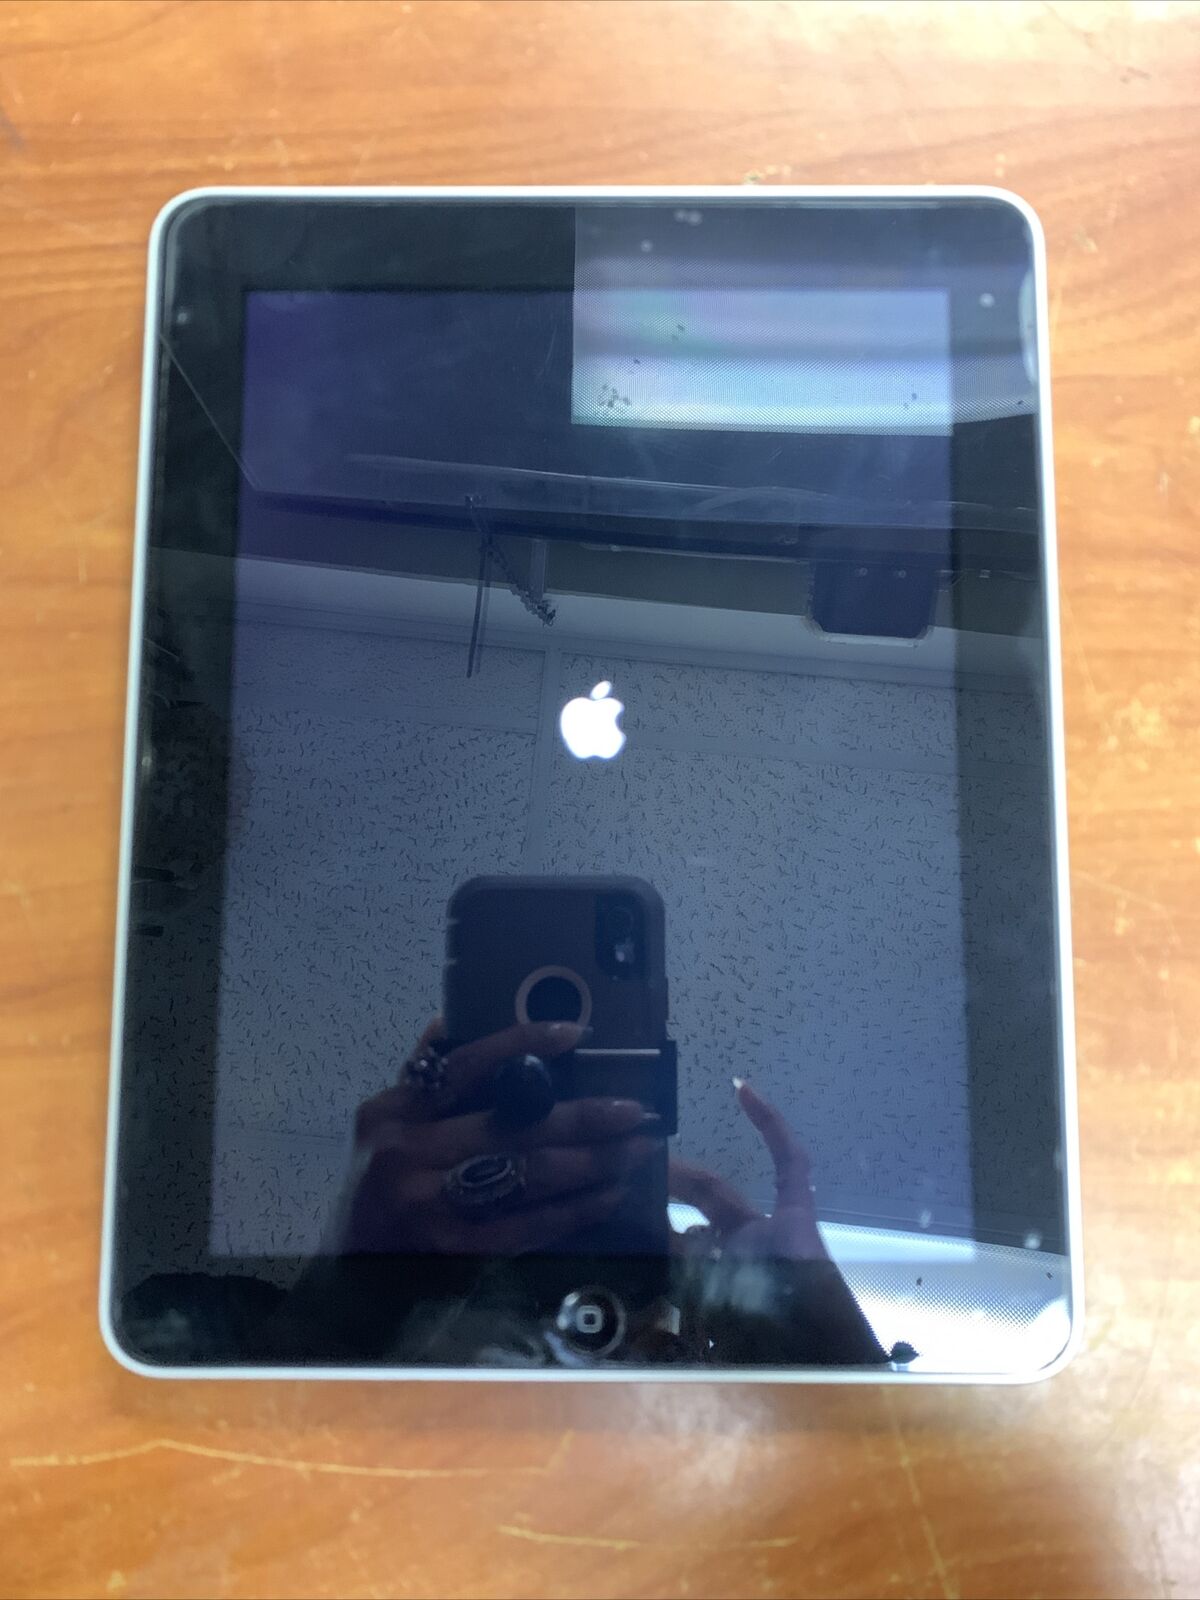 Apple iPad 1 Model A1219 (2010) Silver Wi-Fi  64 GB 9.7 Screen 